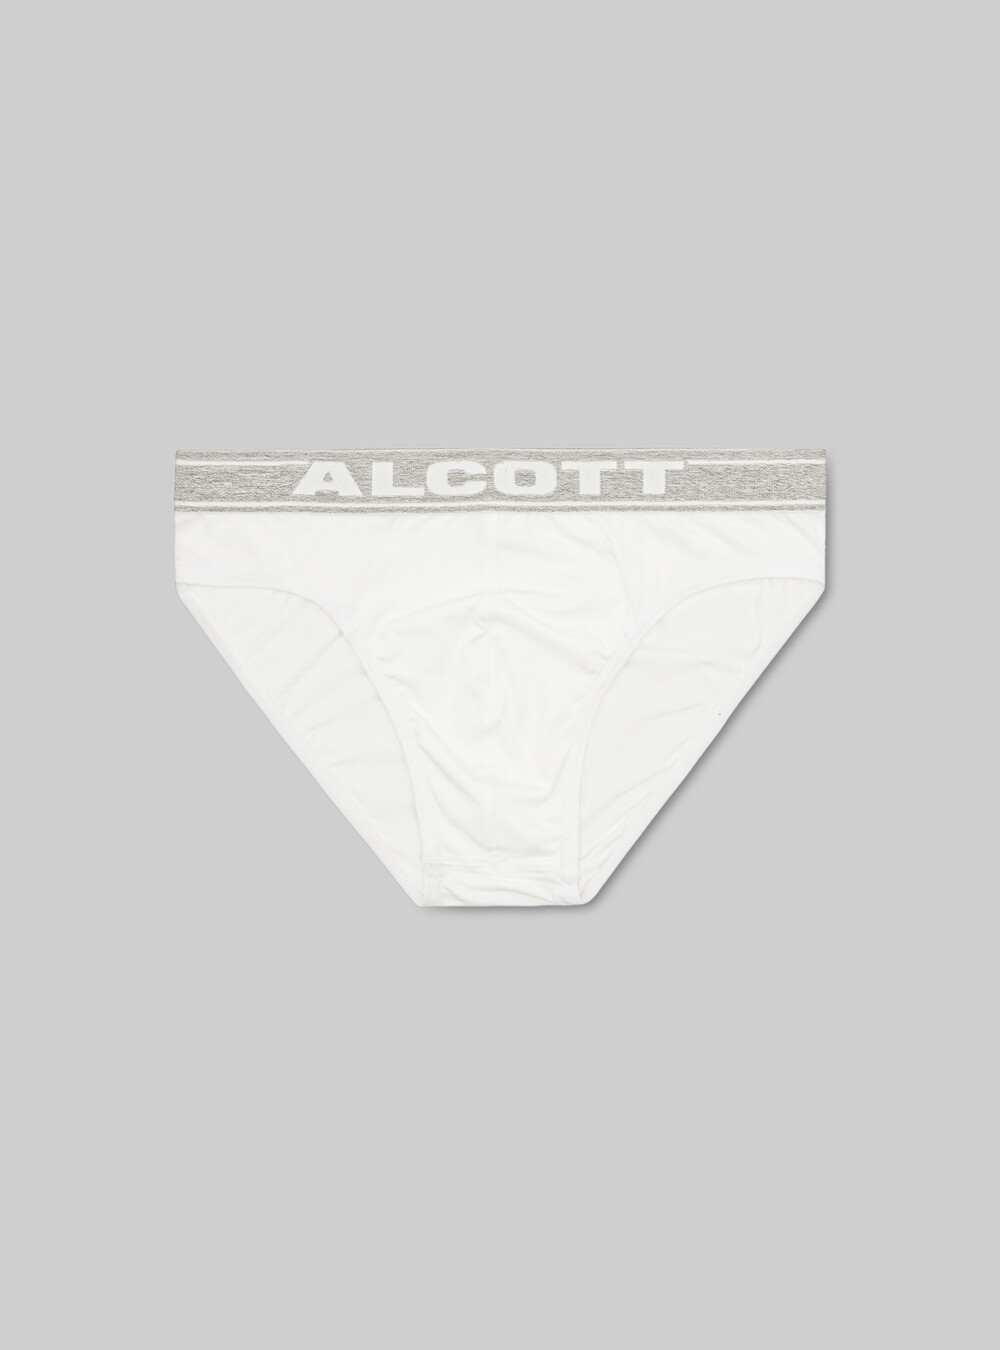 Stretch cotton briefs with logo, Alcott